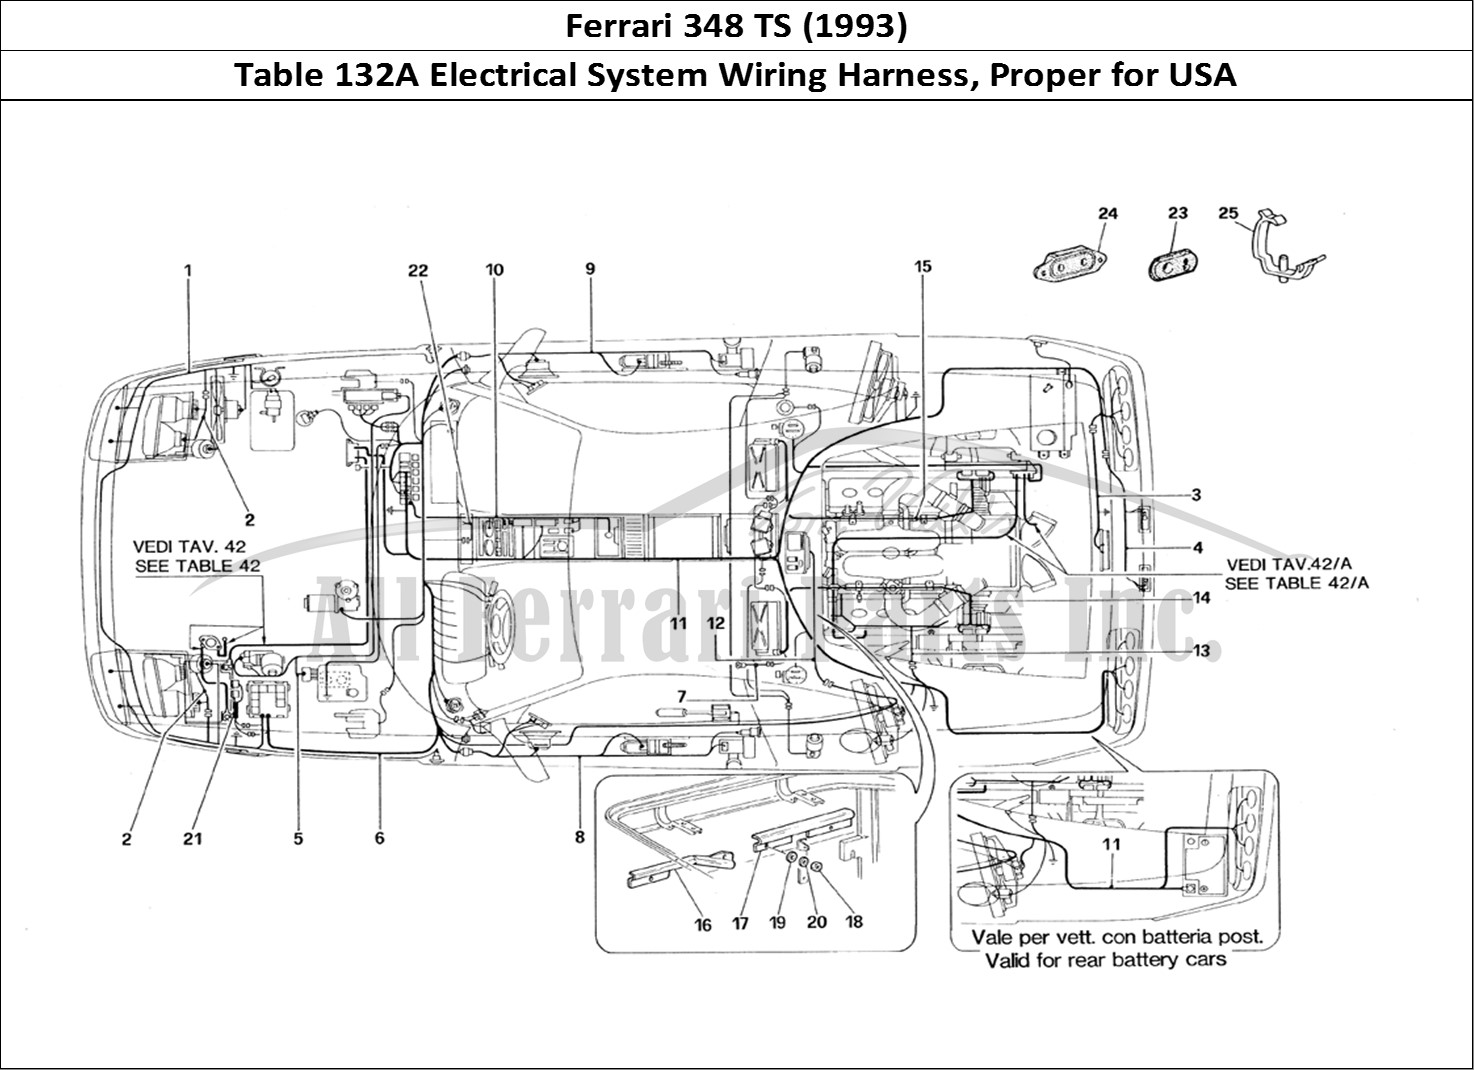 Ferrari Parts Ferrari 348 TB (1993) Page 132 Electrical System - Valid